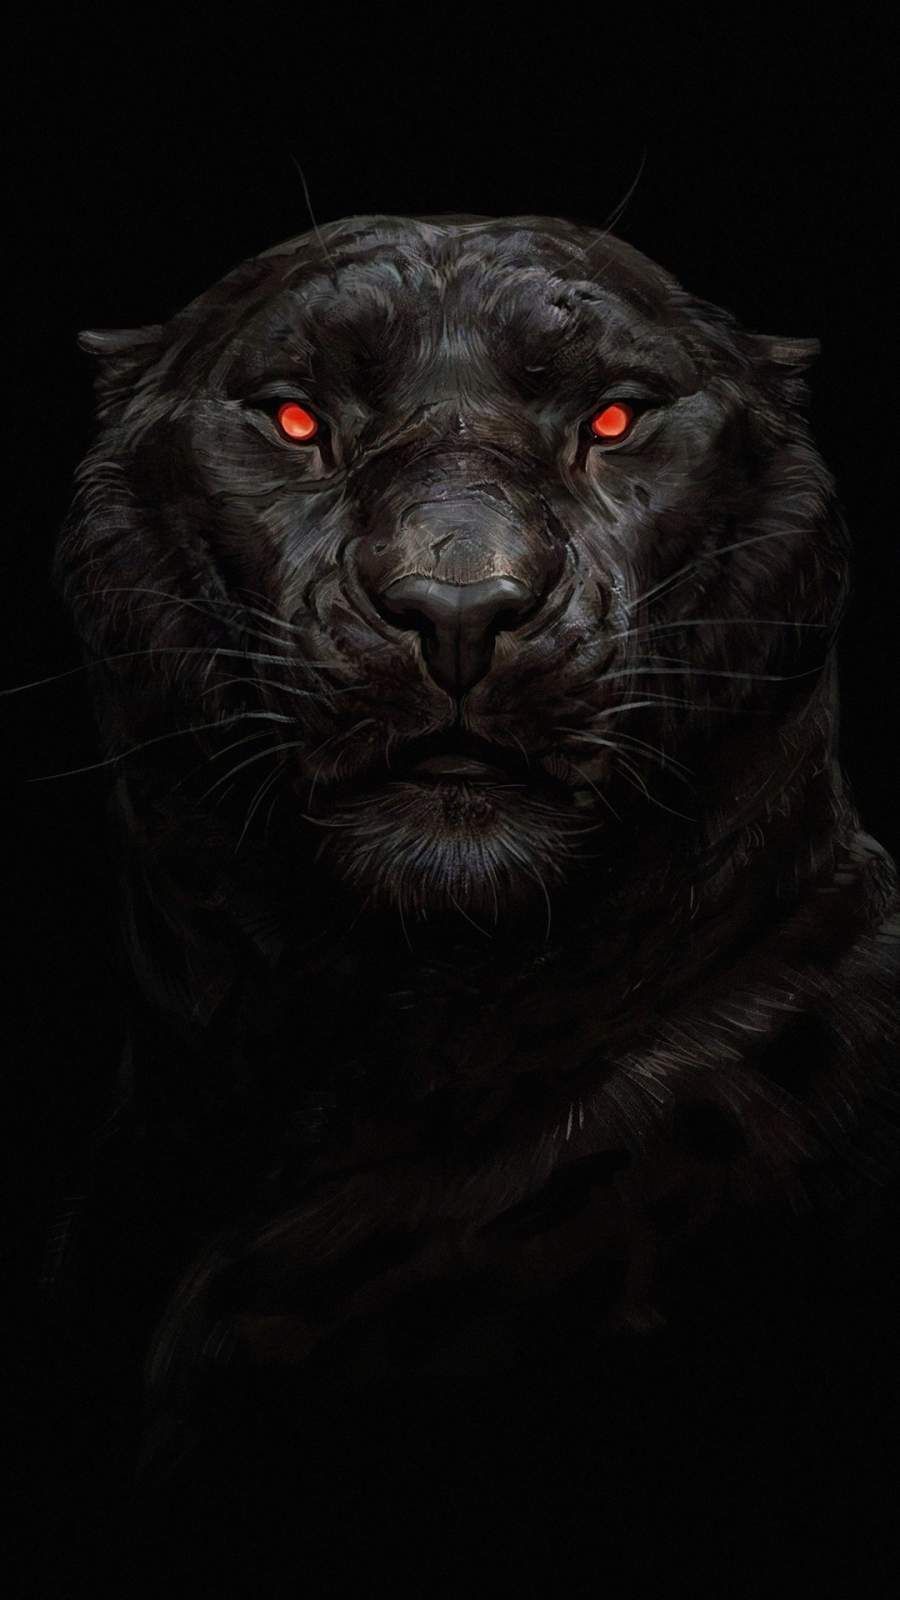 Cool Black Panther Animal iPhone Wallpapers - Top Free Cool Black